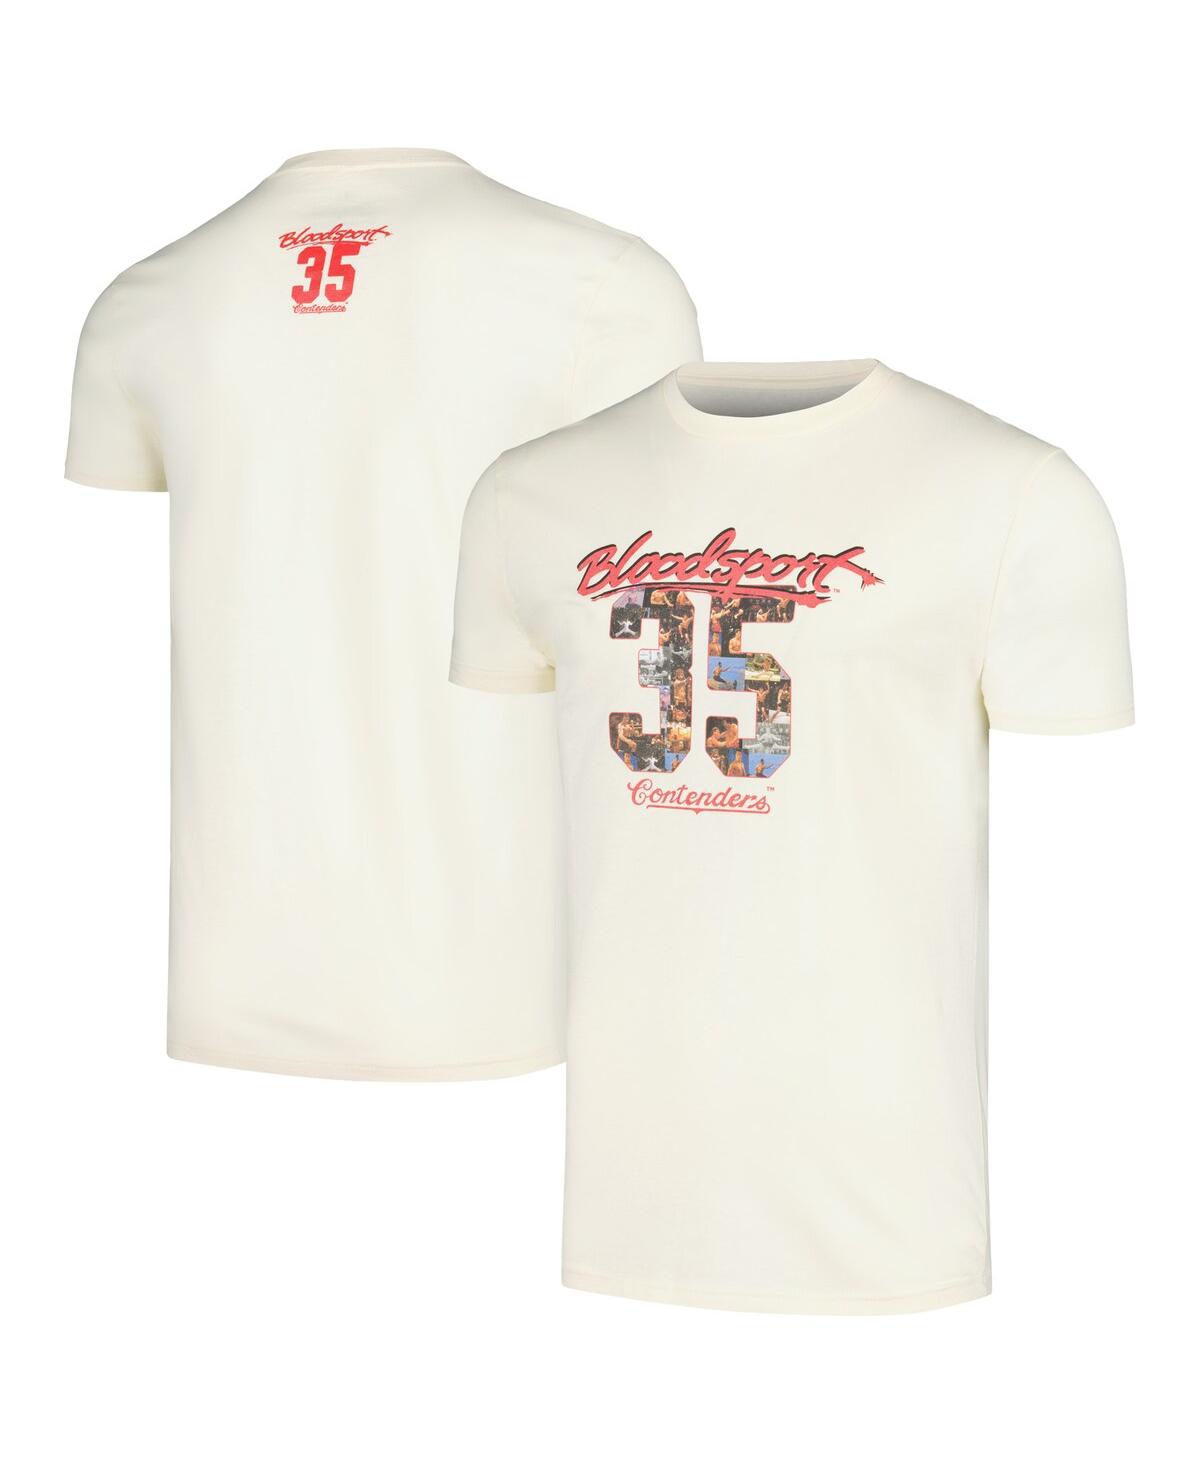 Men's Contenders Clothing Cream Bloodsport 35th Anniversary T-shirt - Cream